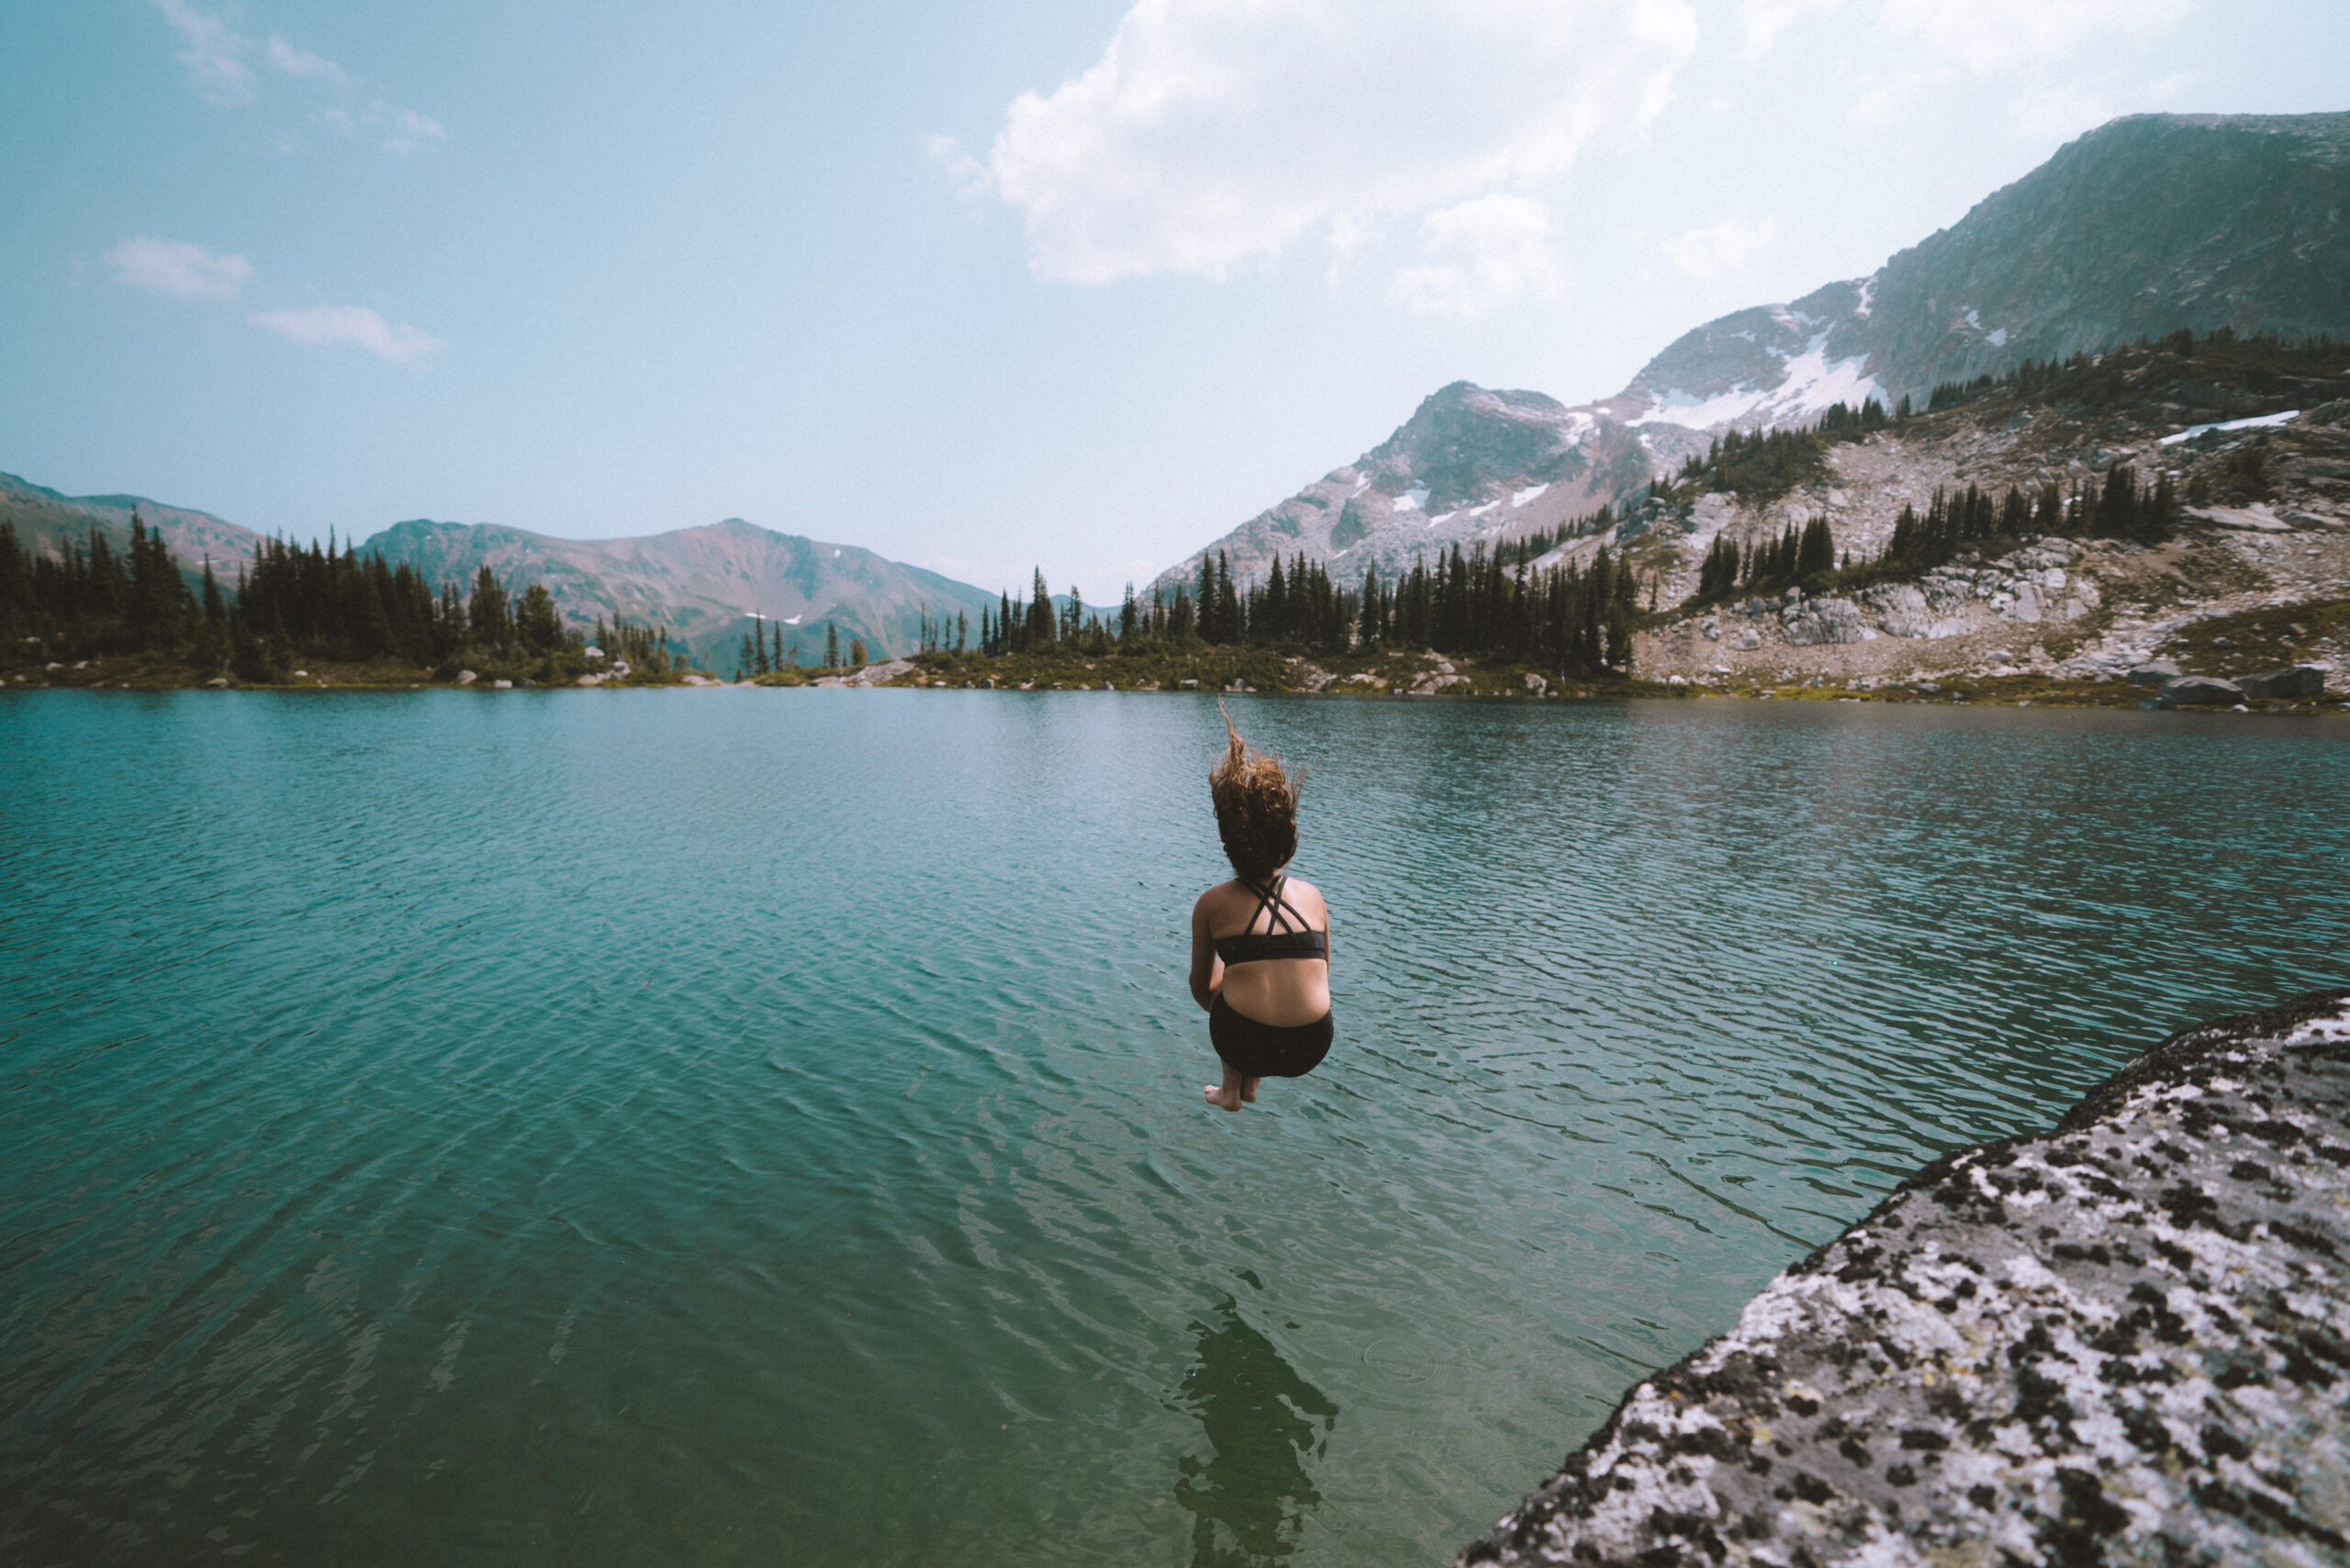 A woman cannonballs into a alpine lake at Whitecap Alpine.